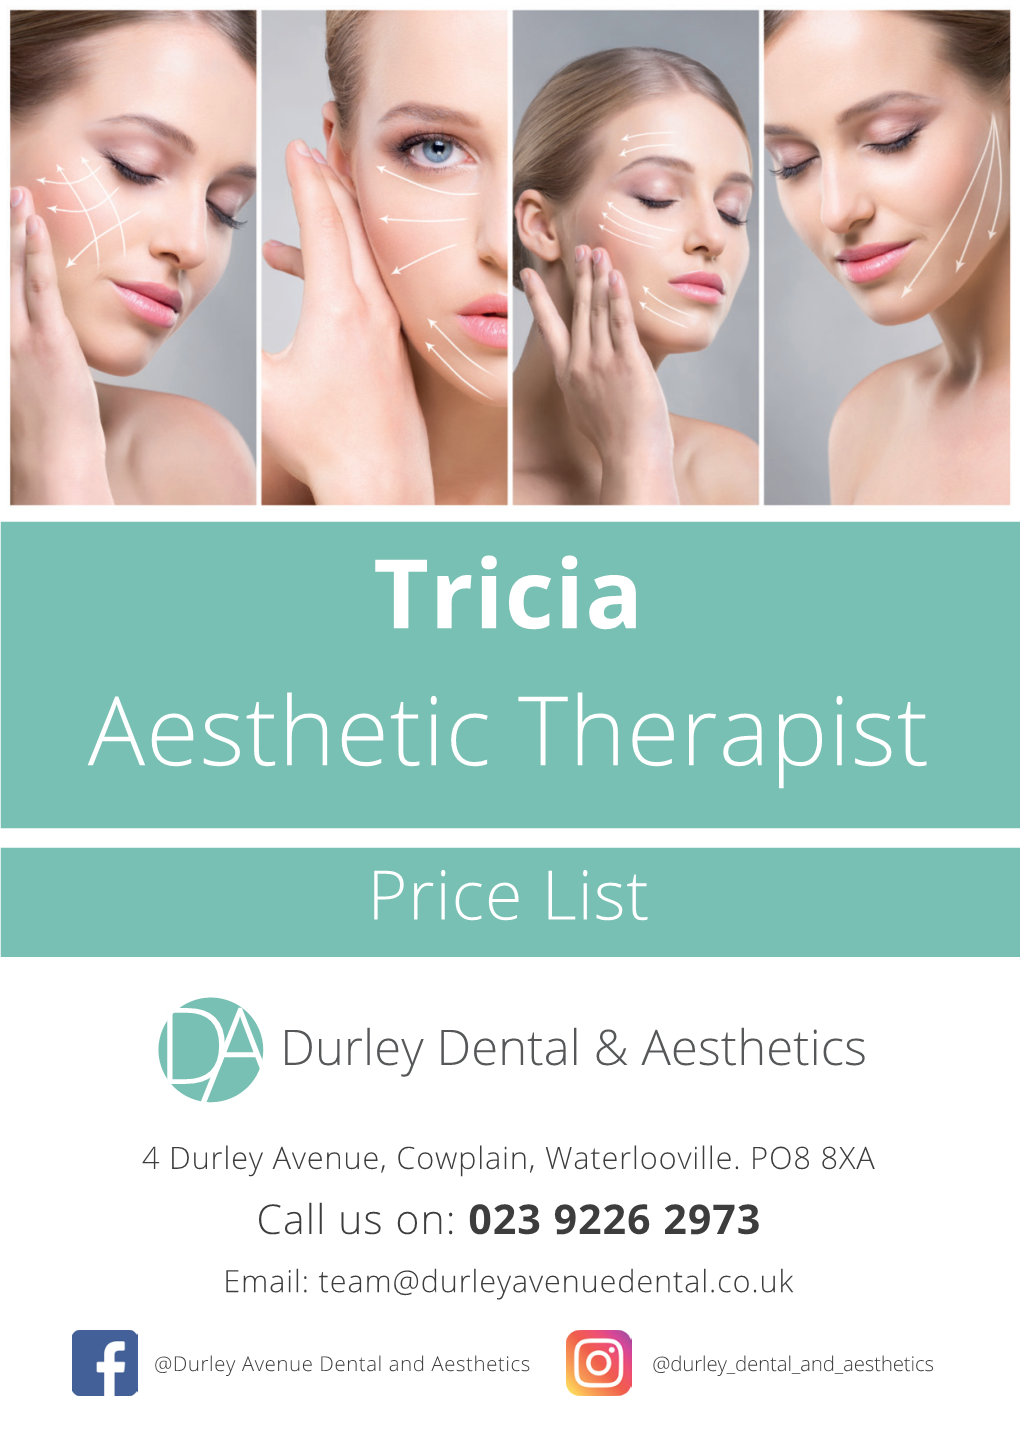 Tricia Aesthetic Therapist